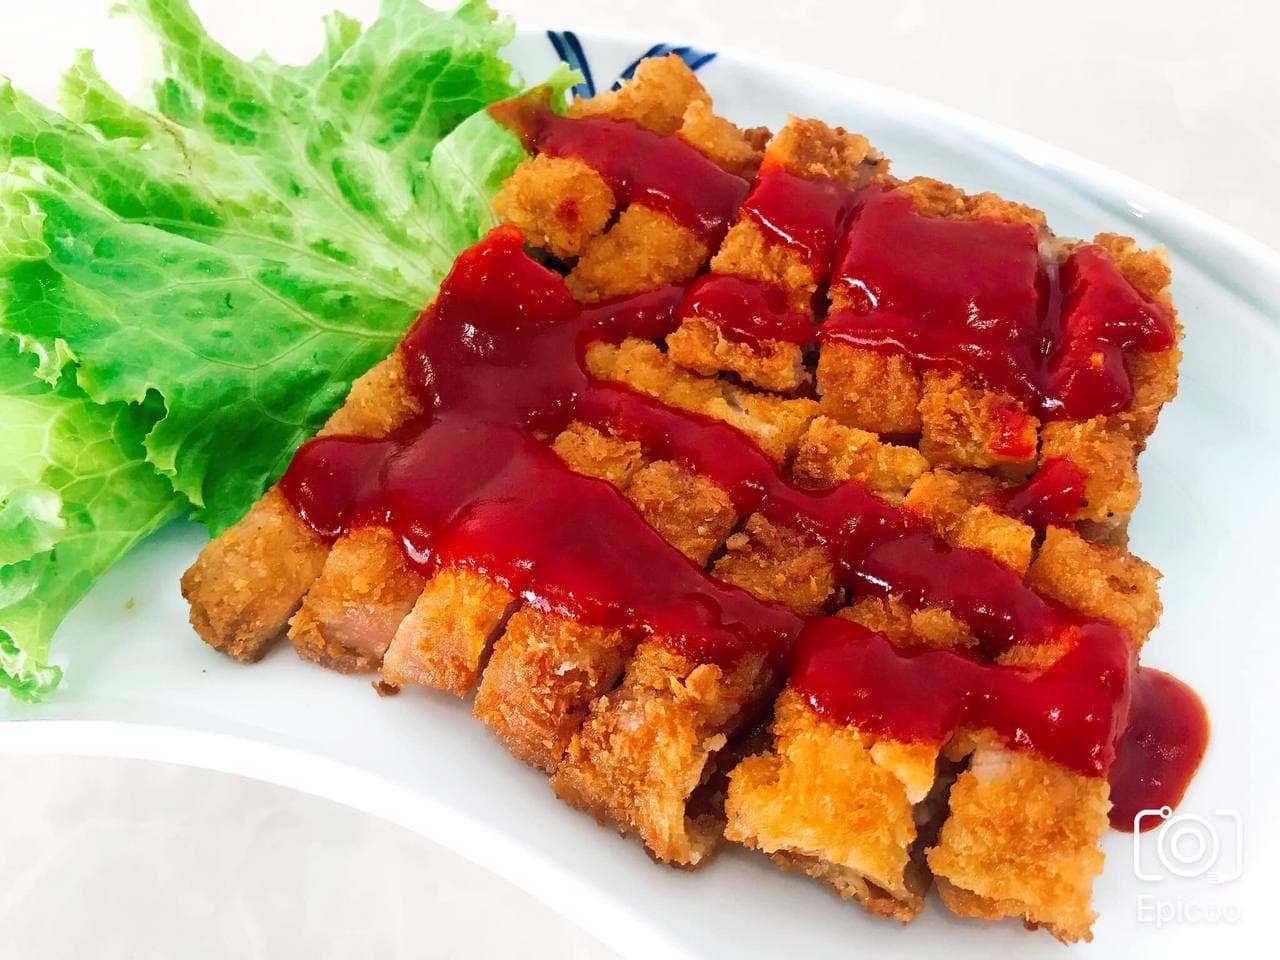 09.Korean style with fried shrimp